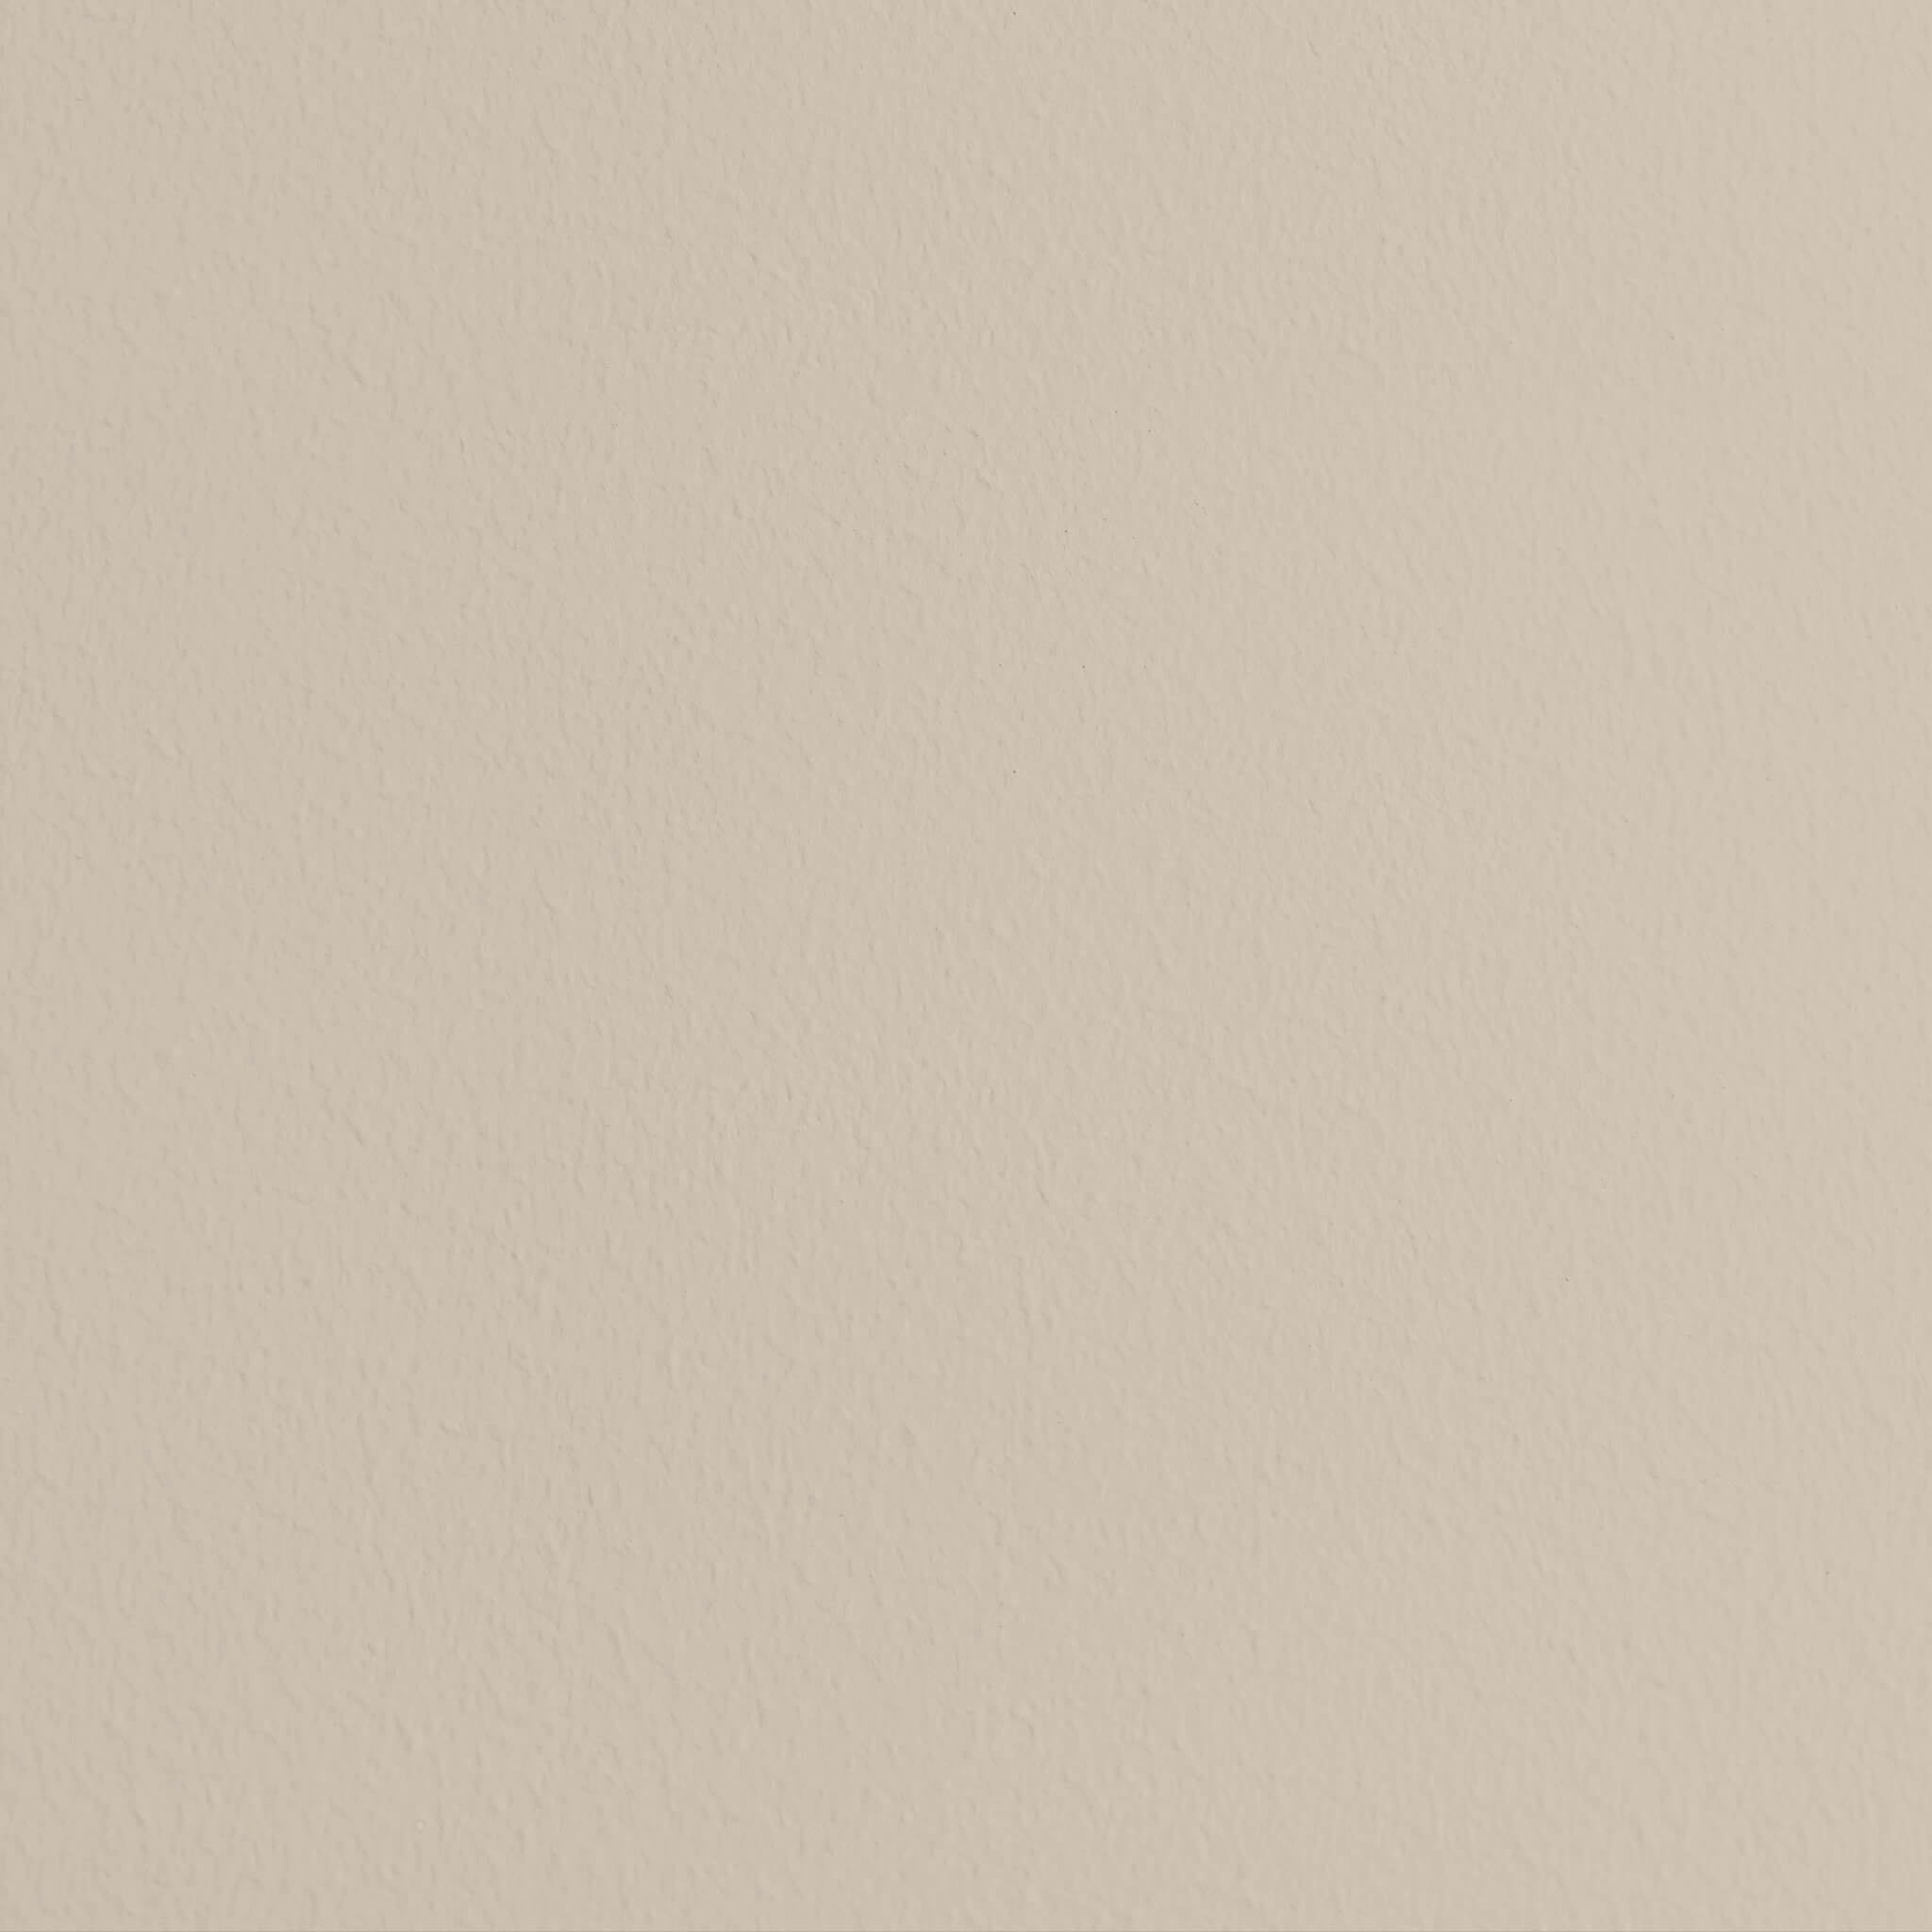 Mylands Hoxton Grey No. 72 - Marble Matt Emulsion / Wandfarbe, 2.5L